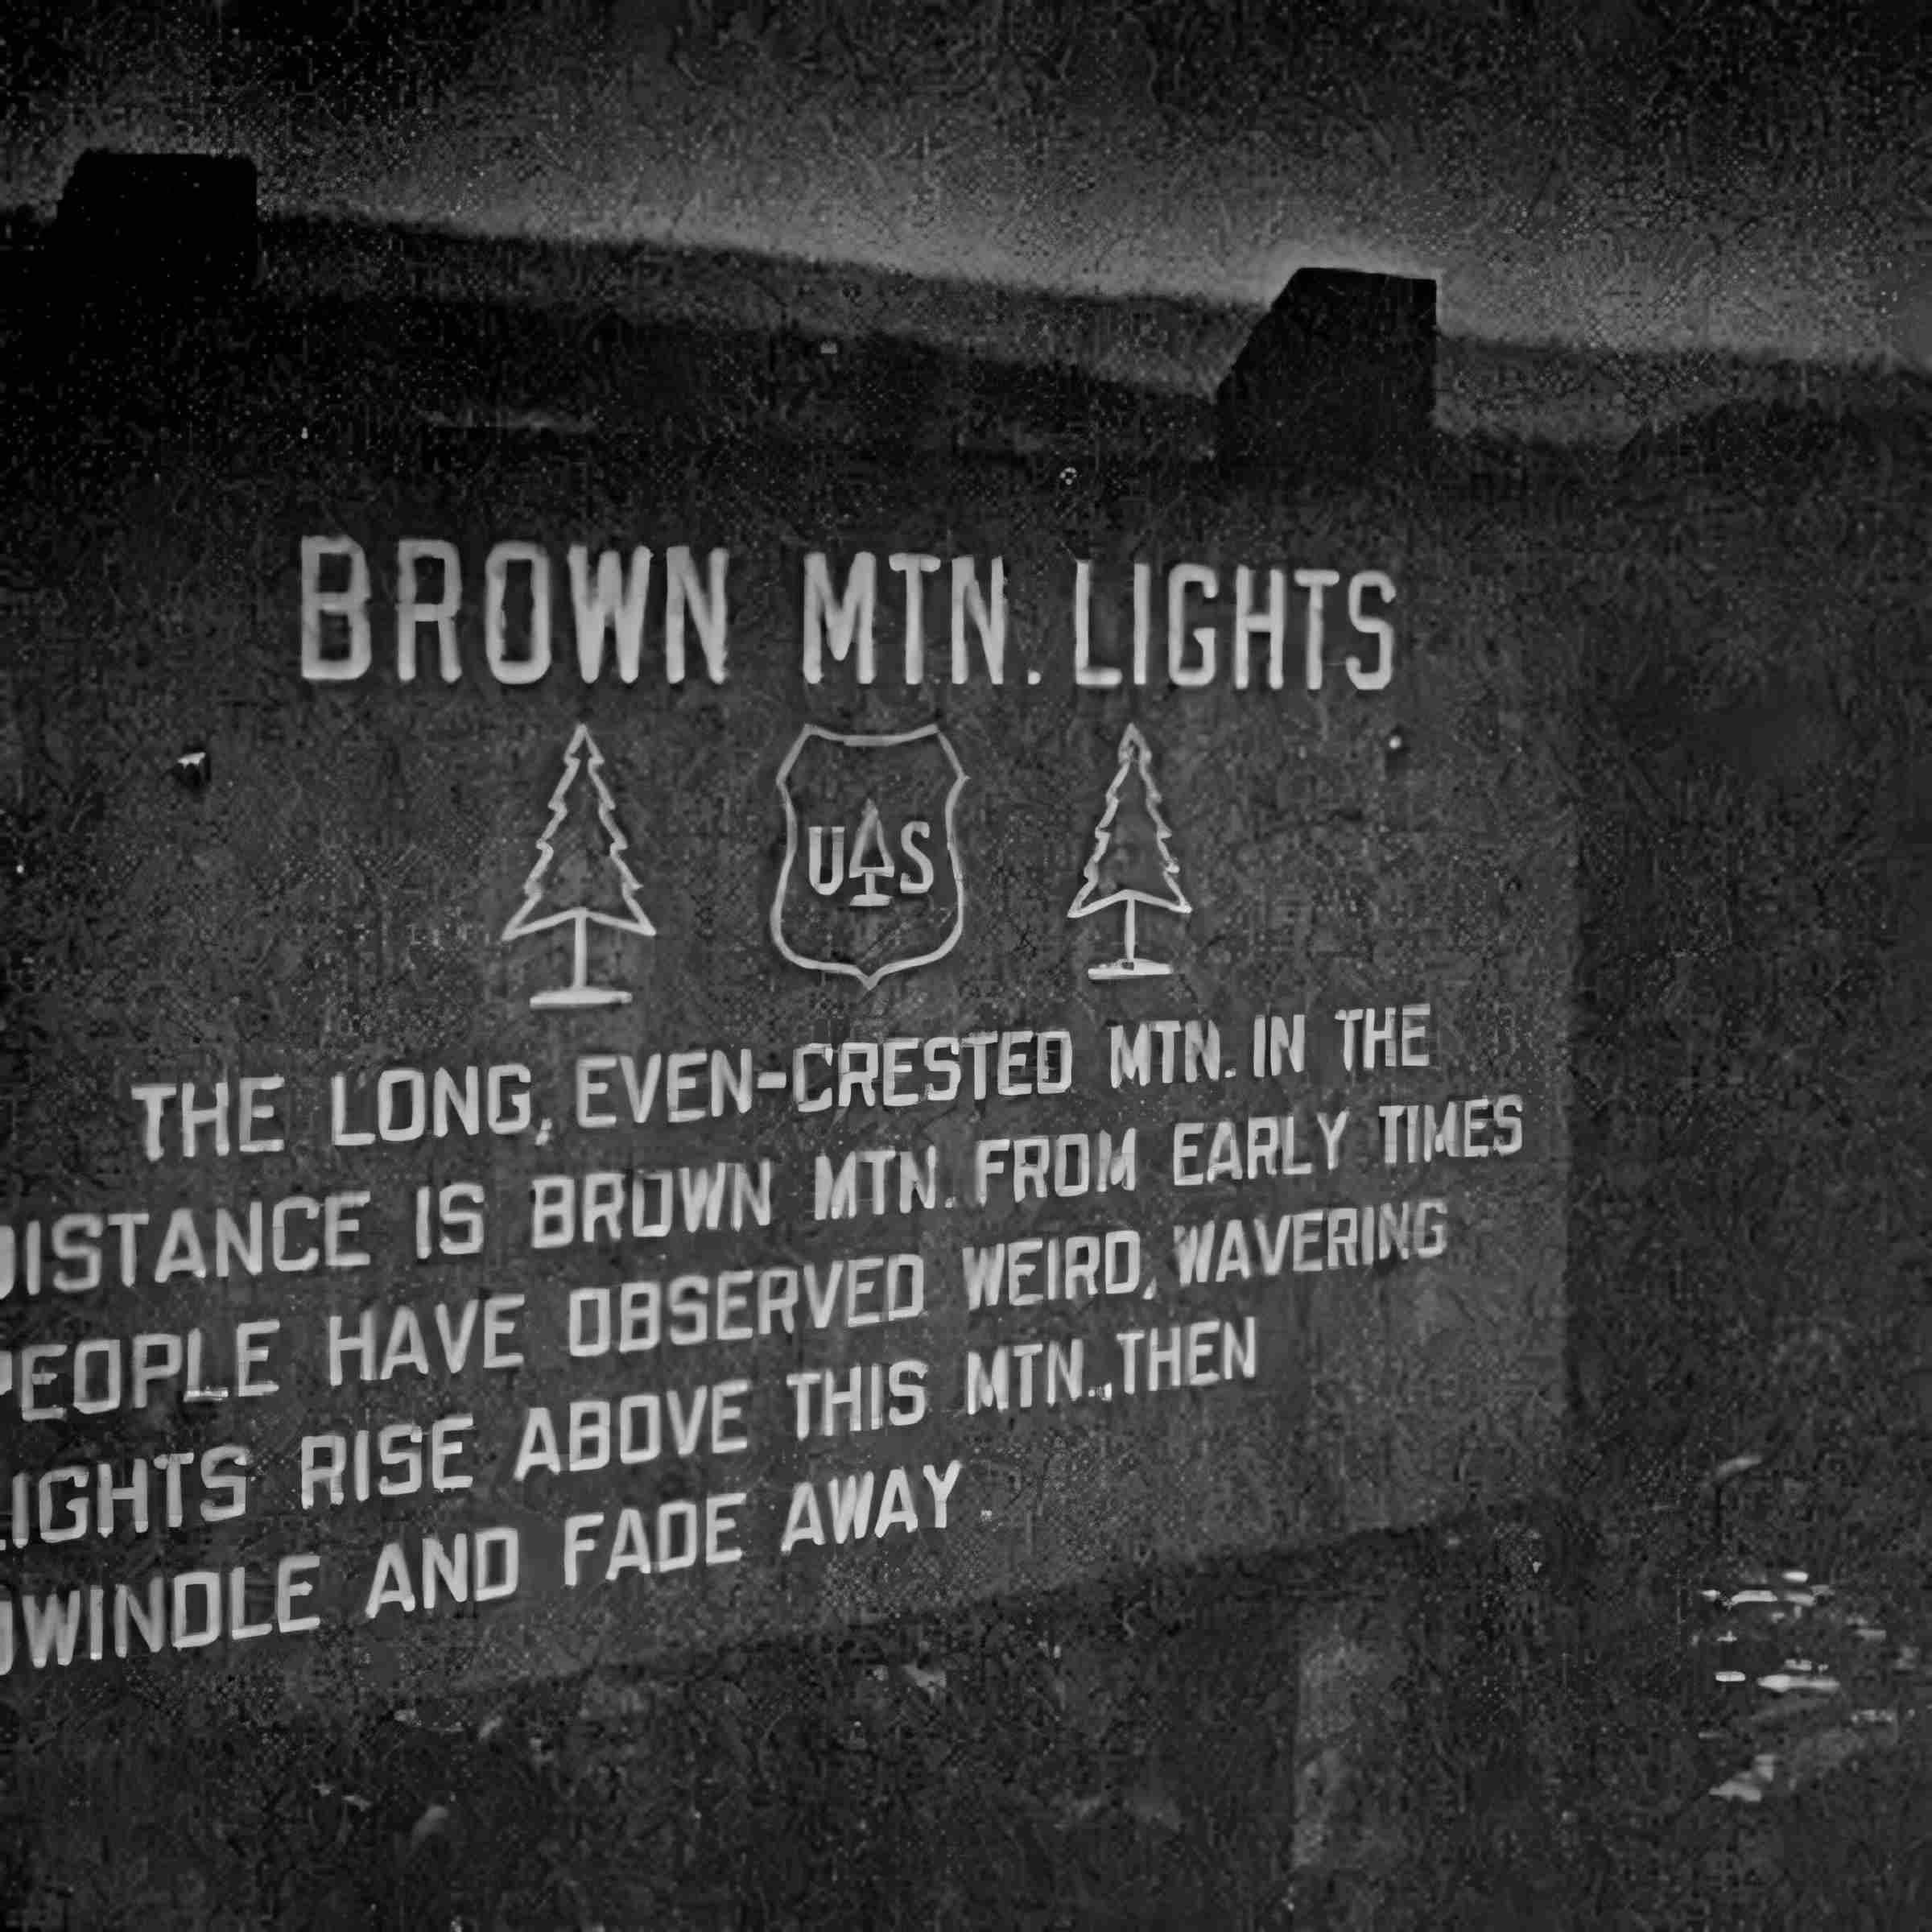 Brown Mountain Lights